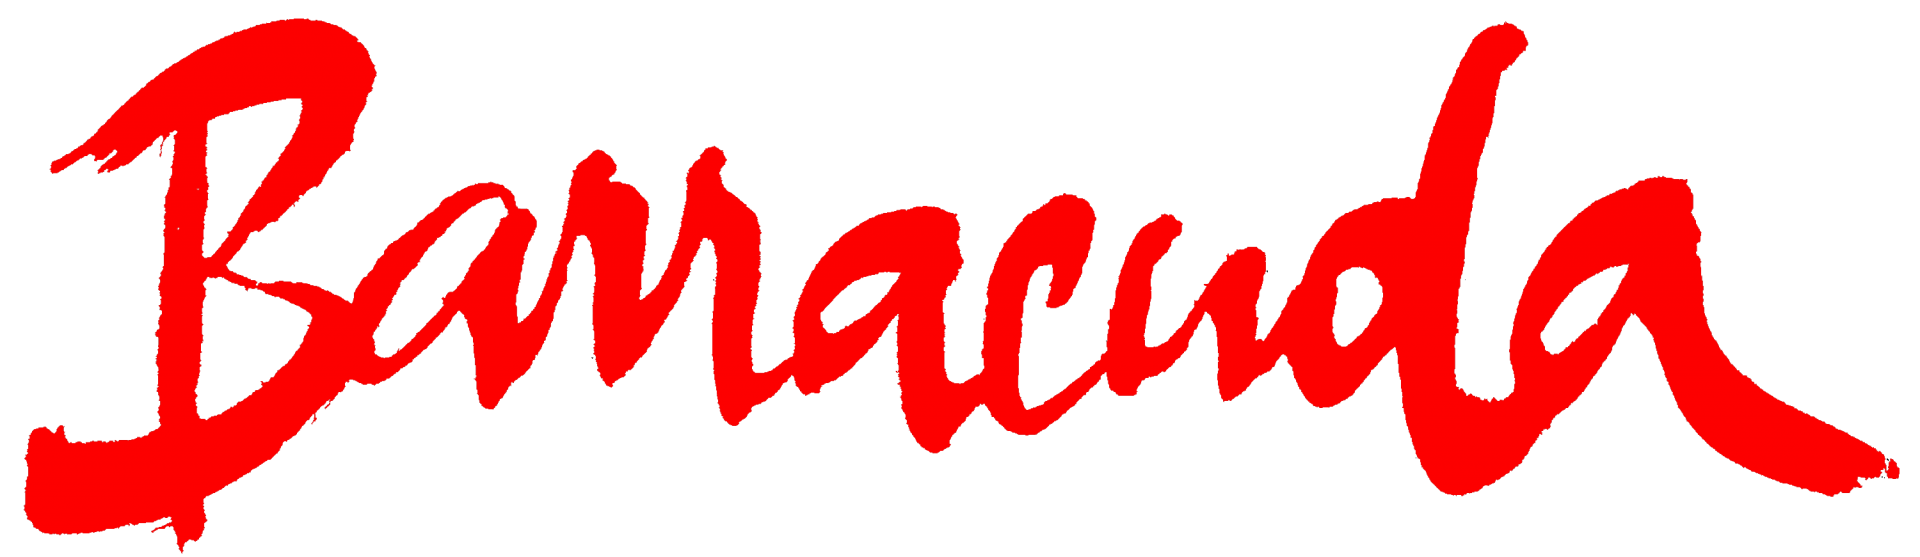 Logo barracuda rouge